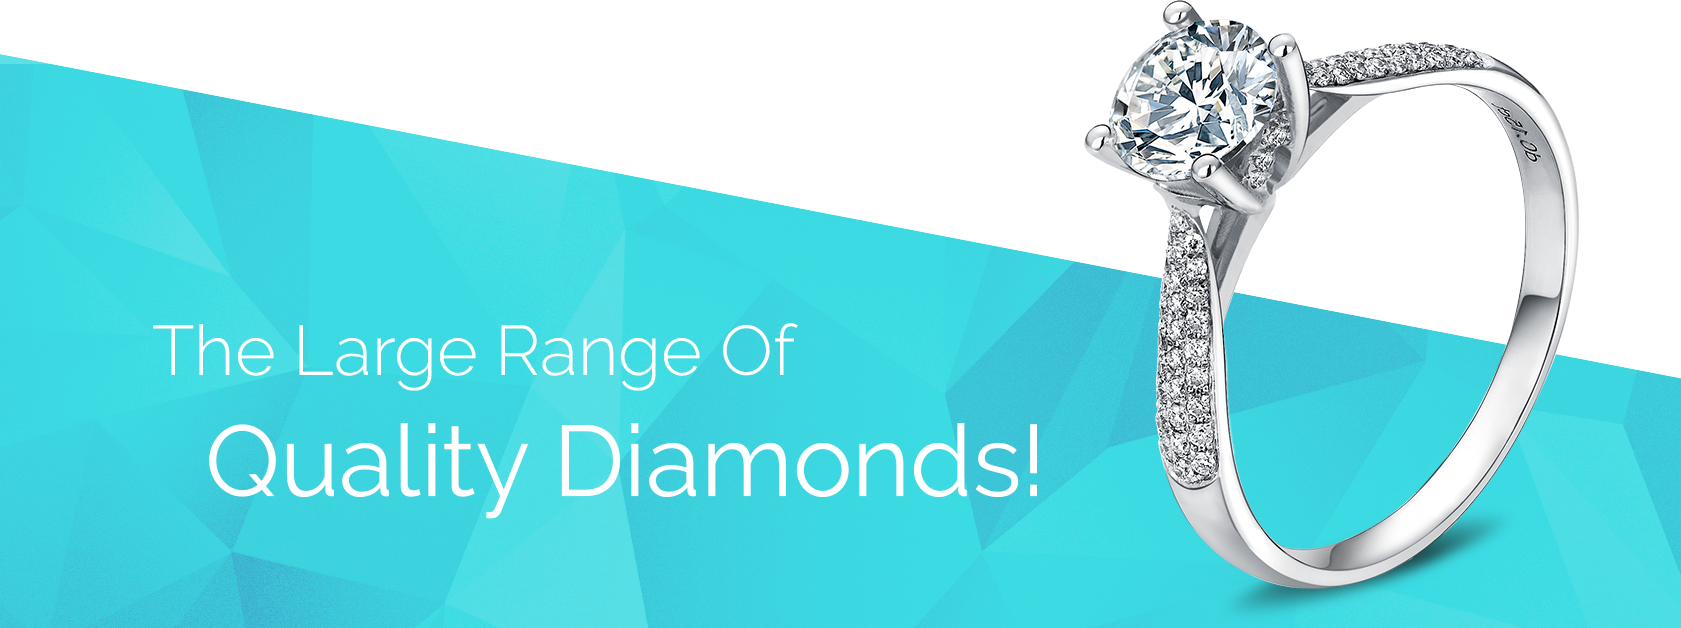 The Large Range of Quality Diamonds